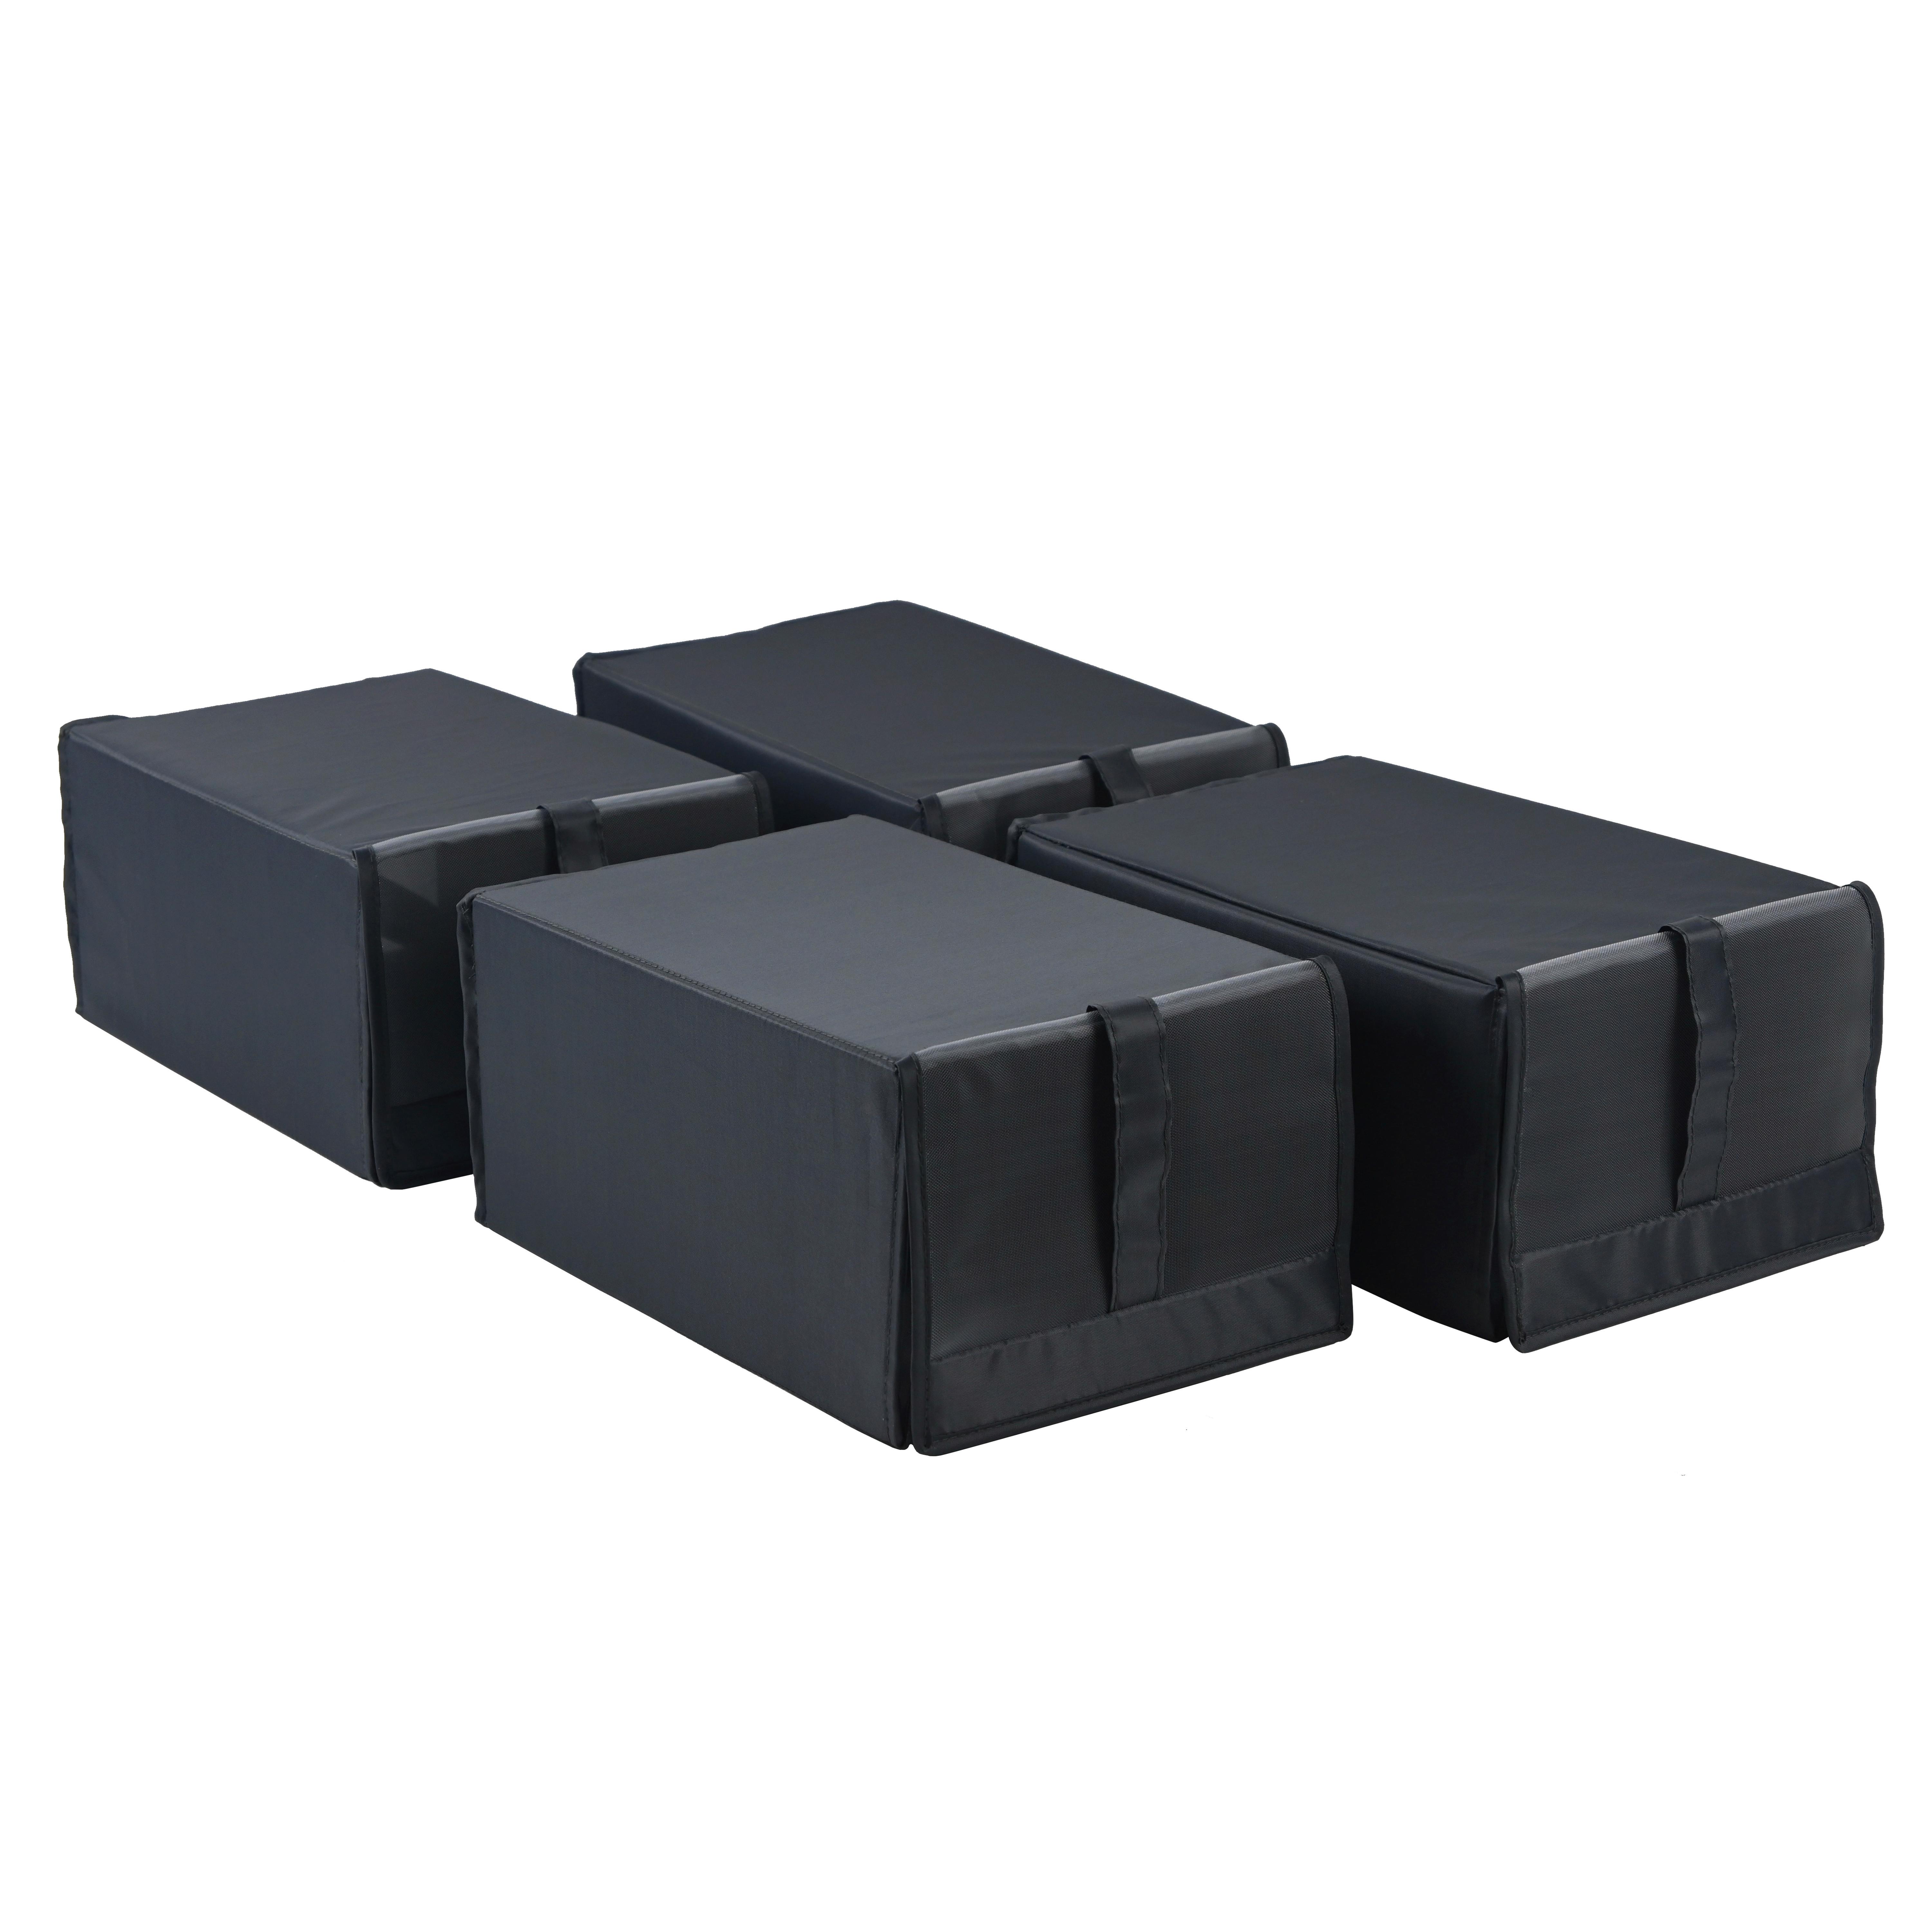 Schuhbox Unit in Grau - Grau, Konventionell, Kunststoff/Textil (22/34/16cm) - Modern Living